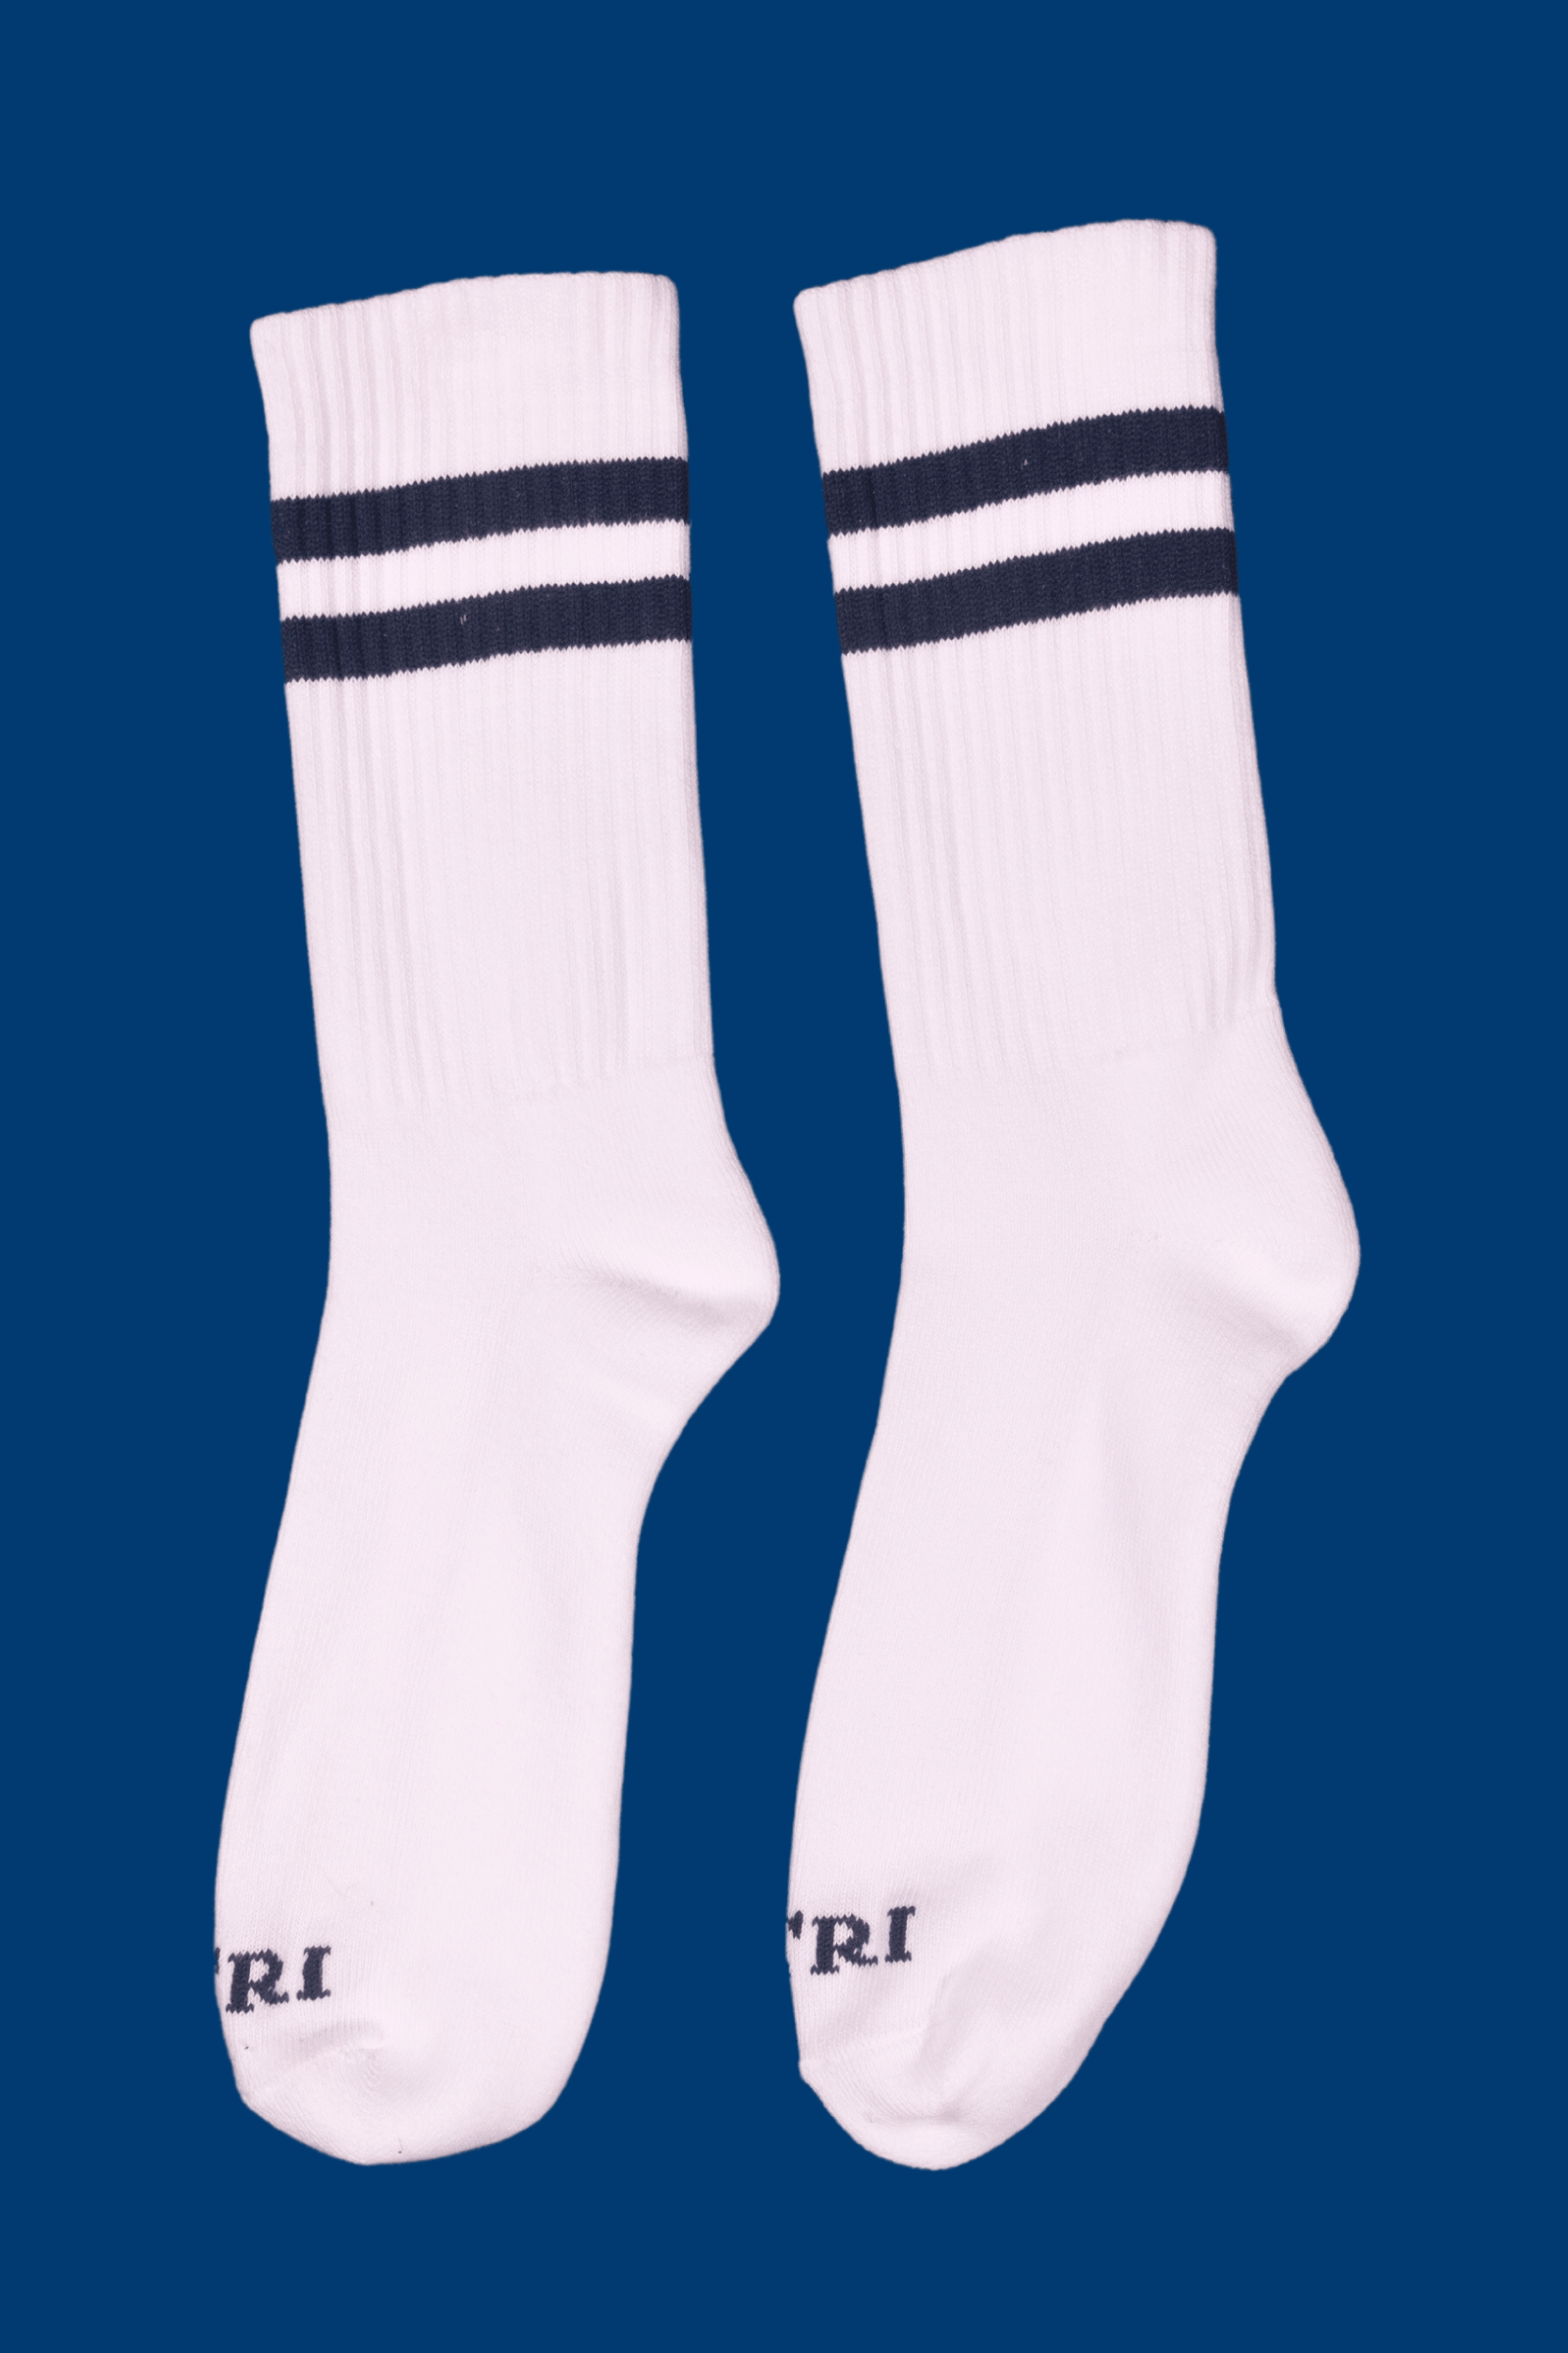 Sports Socks Png